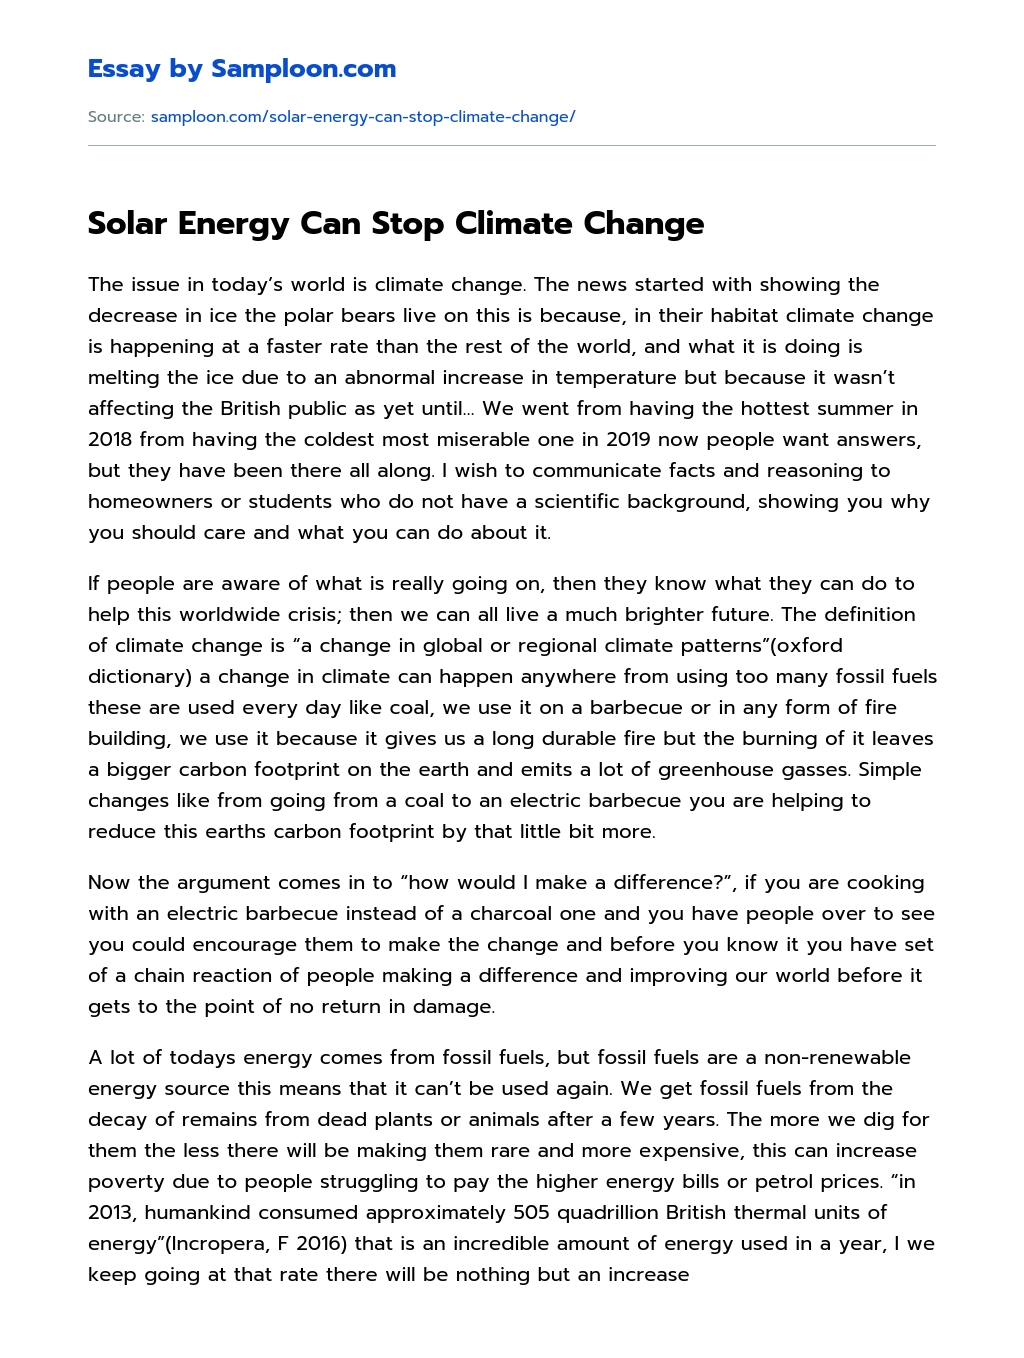 Solar Energy Can Stop Climate Change Argumentative Essay essay